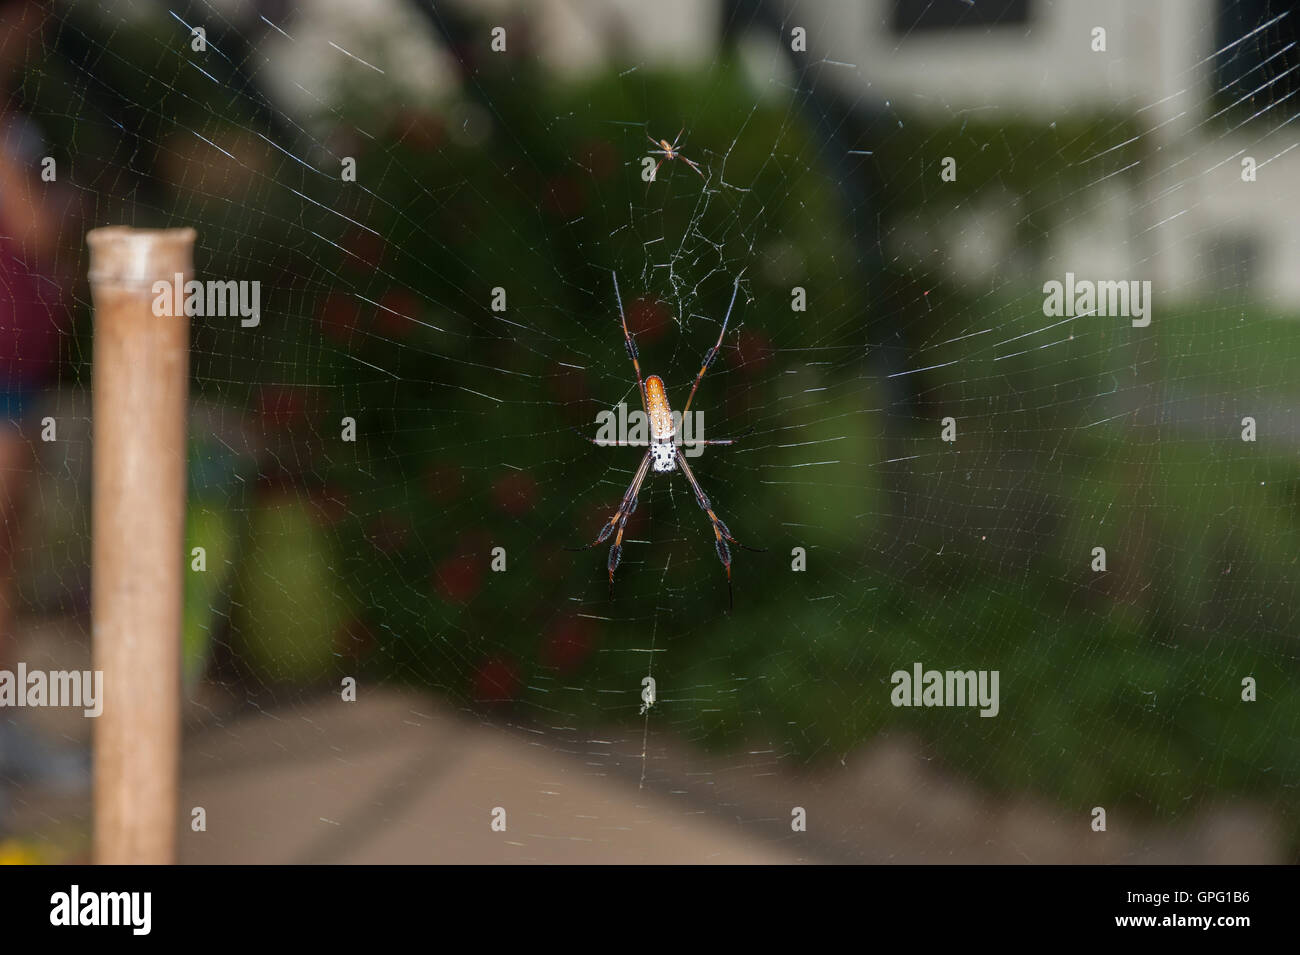 Golden Orbweaver spider sitting in center of web trap Stock Photo